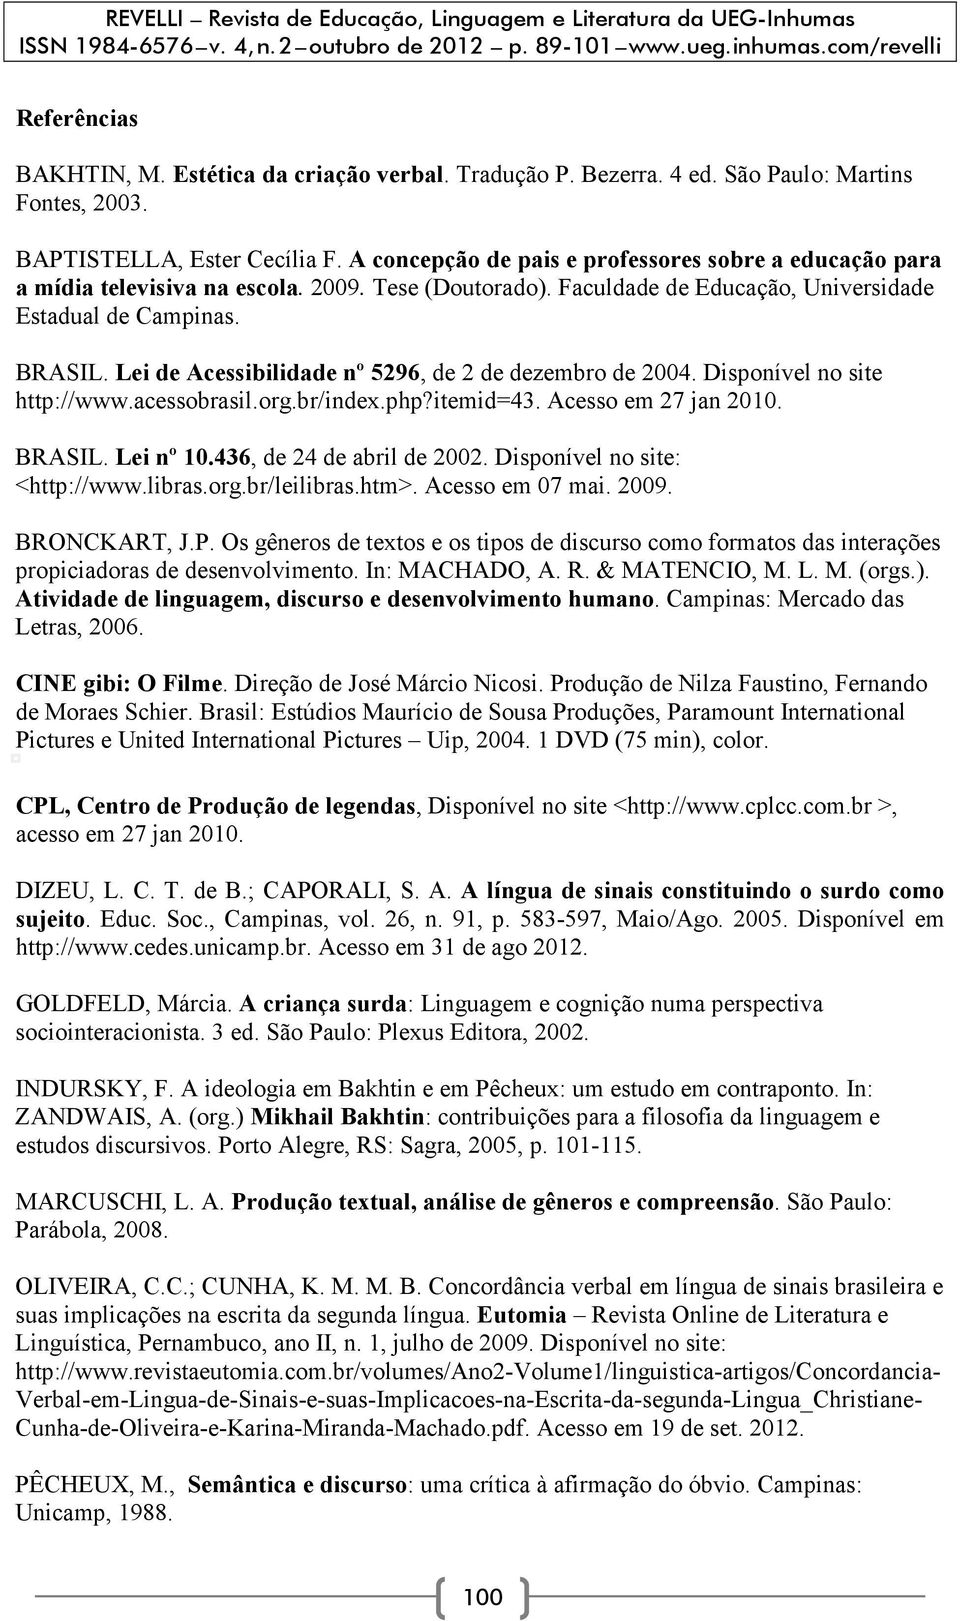 Lei de Acessibilidade nº 5296, de 2 de dezembro de 2004. Disponível no site http://www.acessobrasil.org.br/index.php?itemid=43. Acesso em 27 jan 2010. BRASIL. Lei nº 10.436, de 24 de abril de 2002.